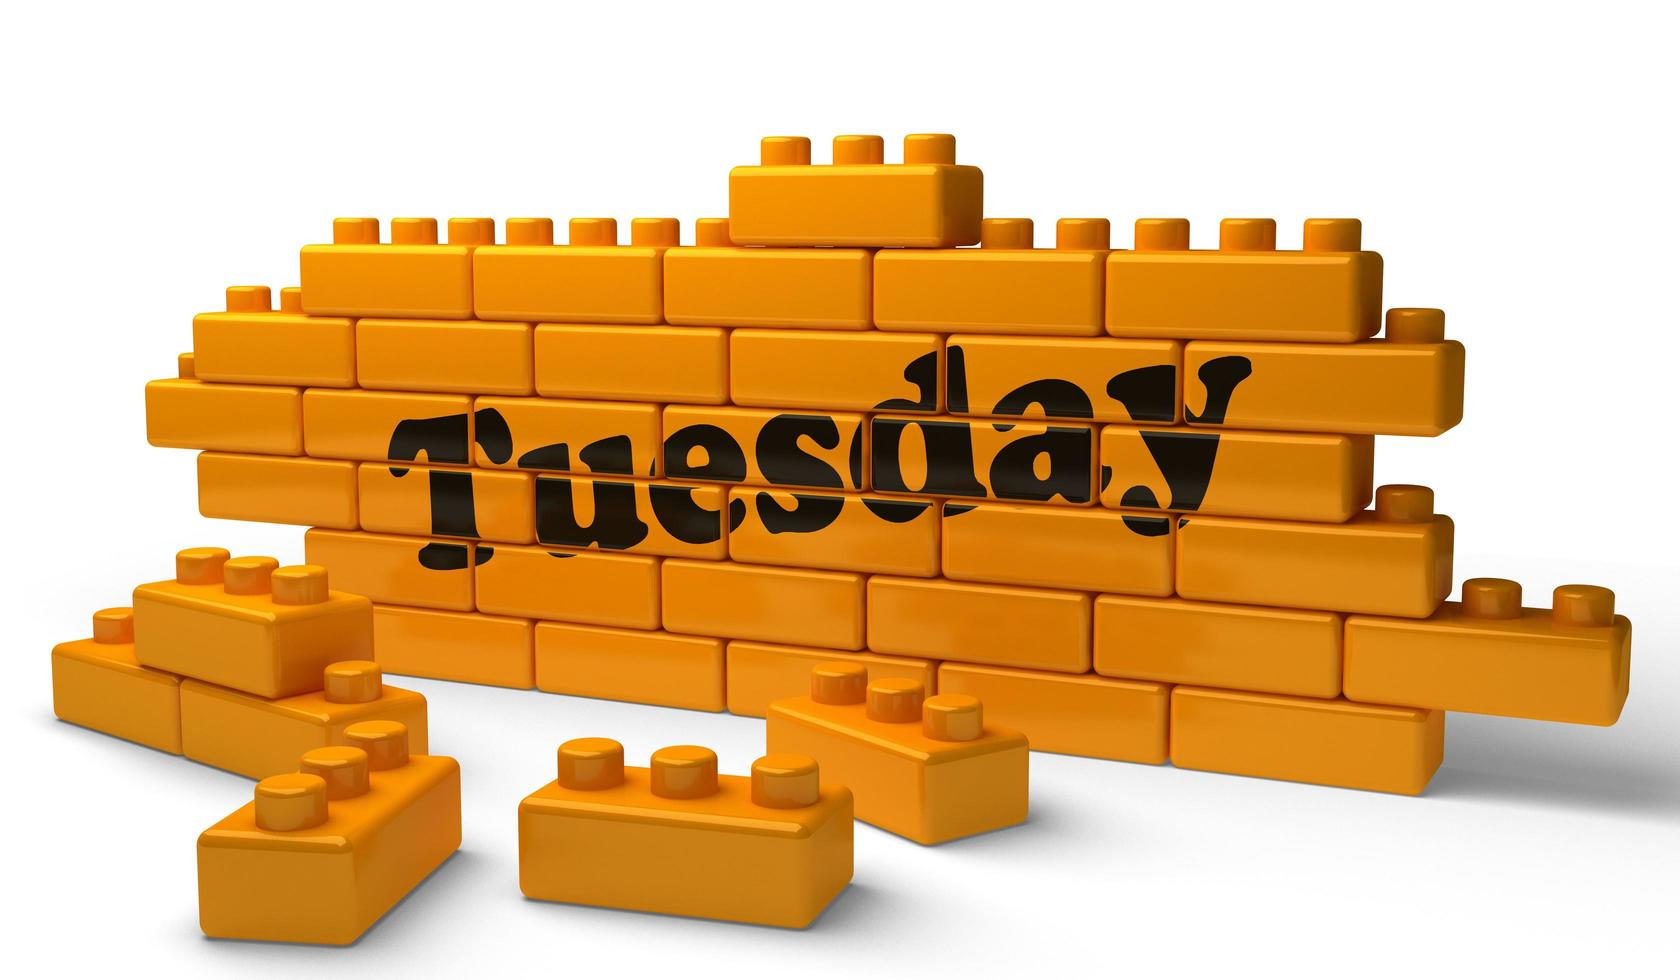 Tuesday word on yellow brick wall photo